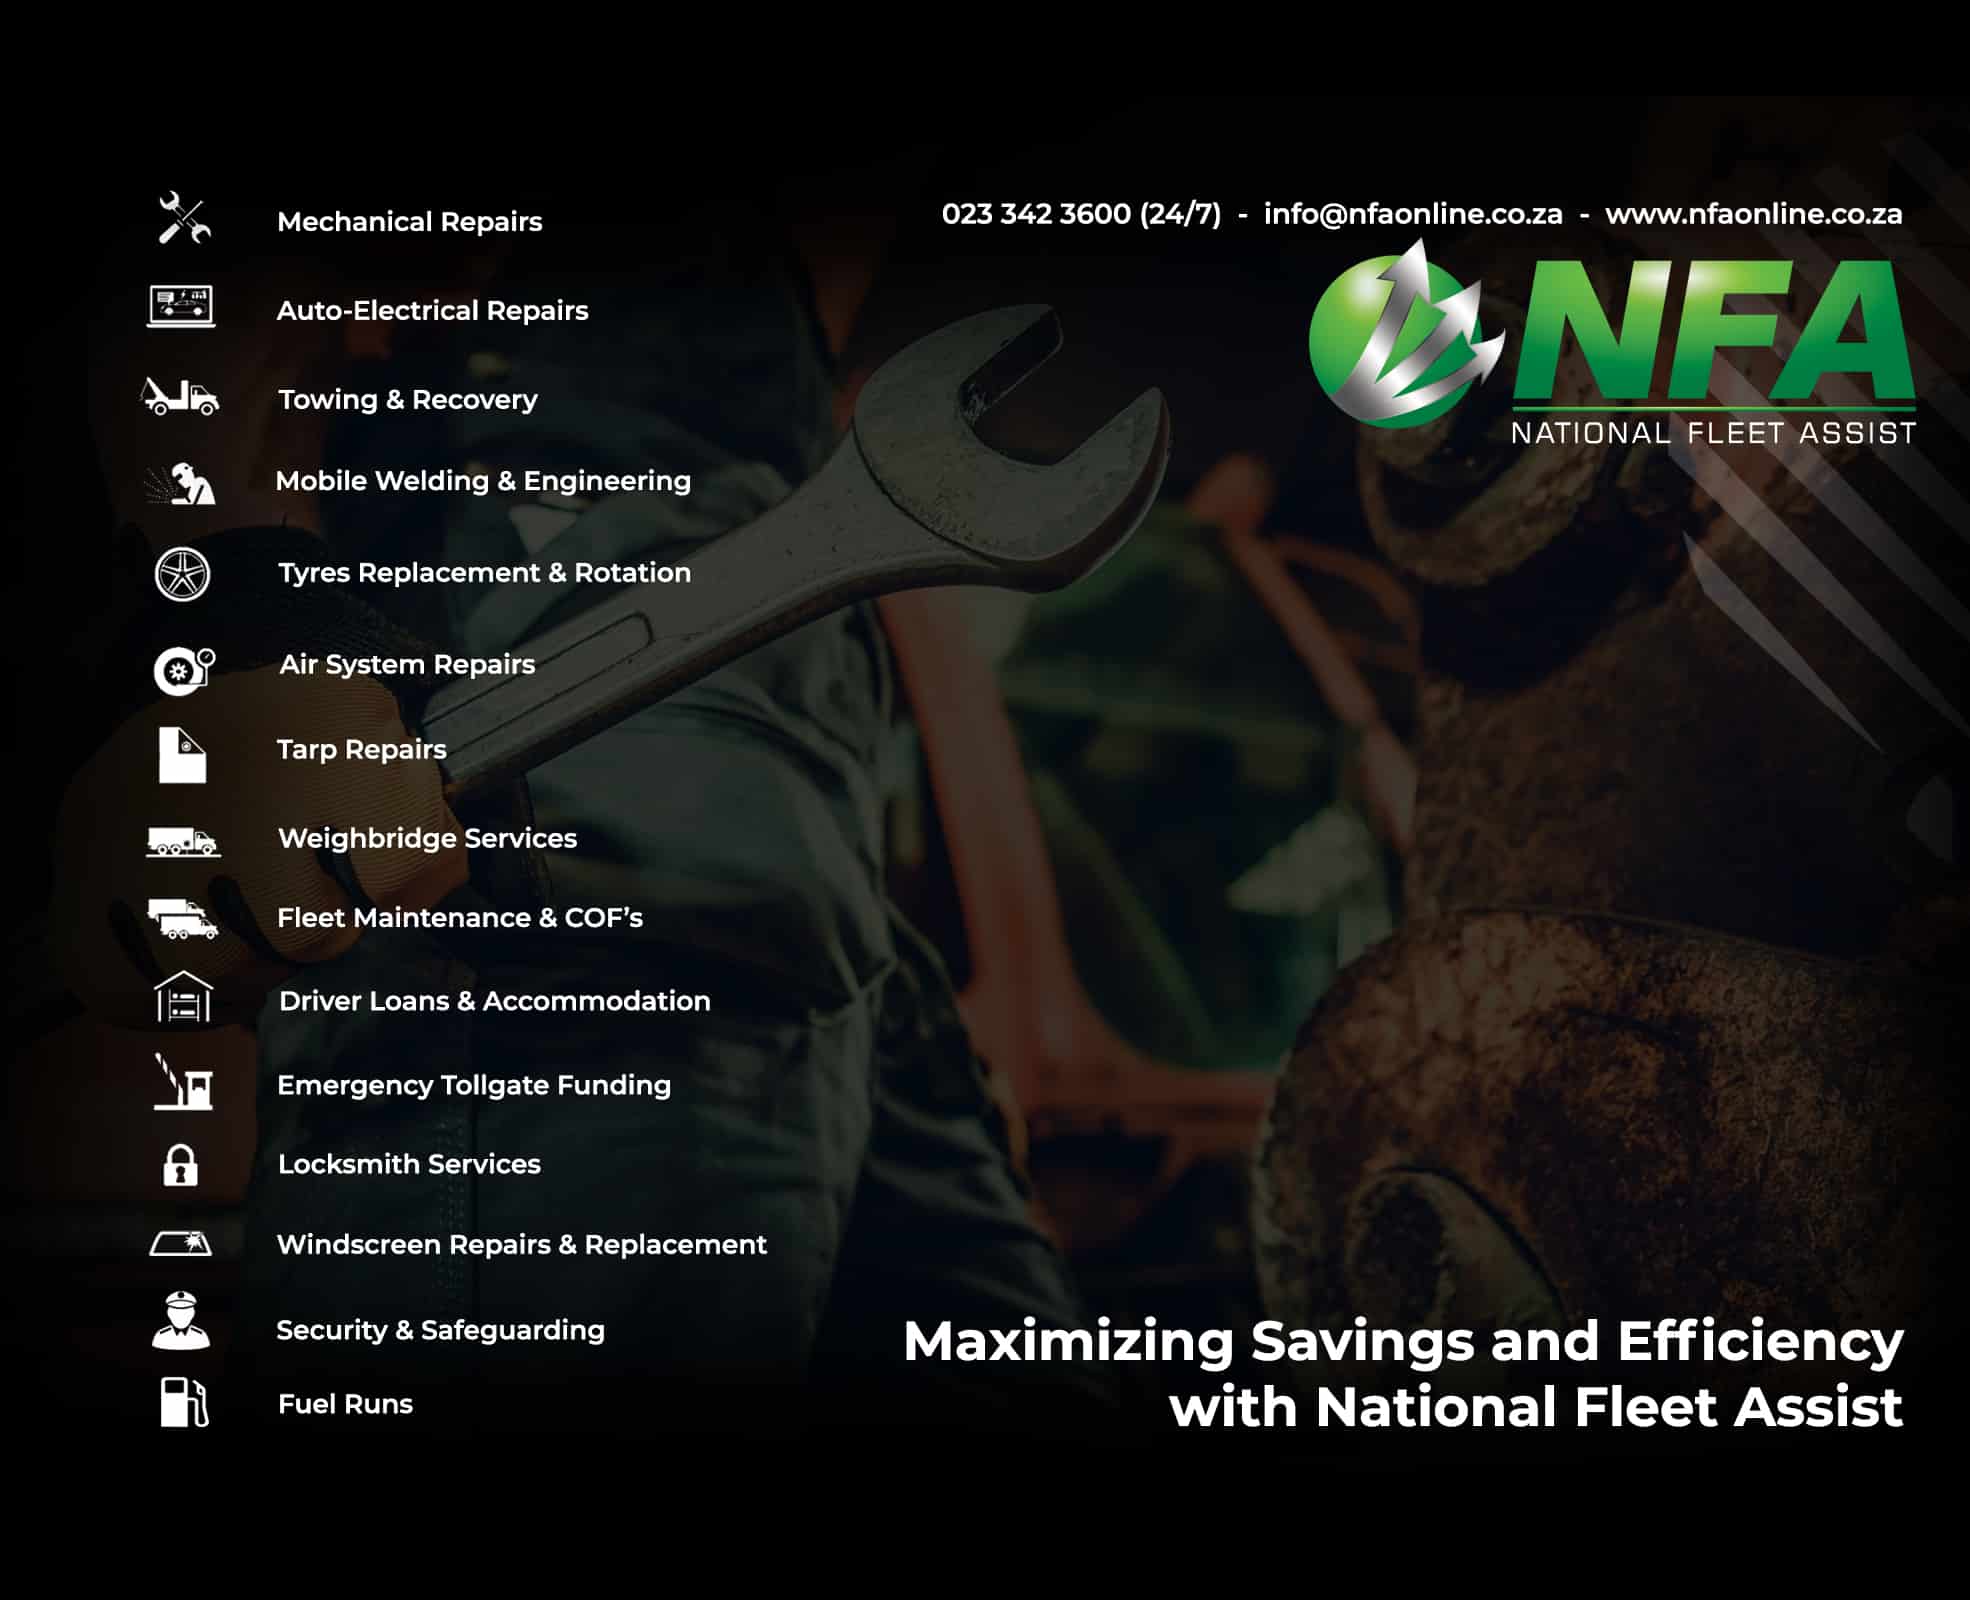 National Fleet Assist Maximizing Savings and Efficiency with National Fleet Assist